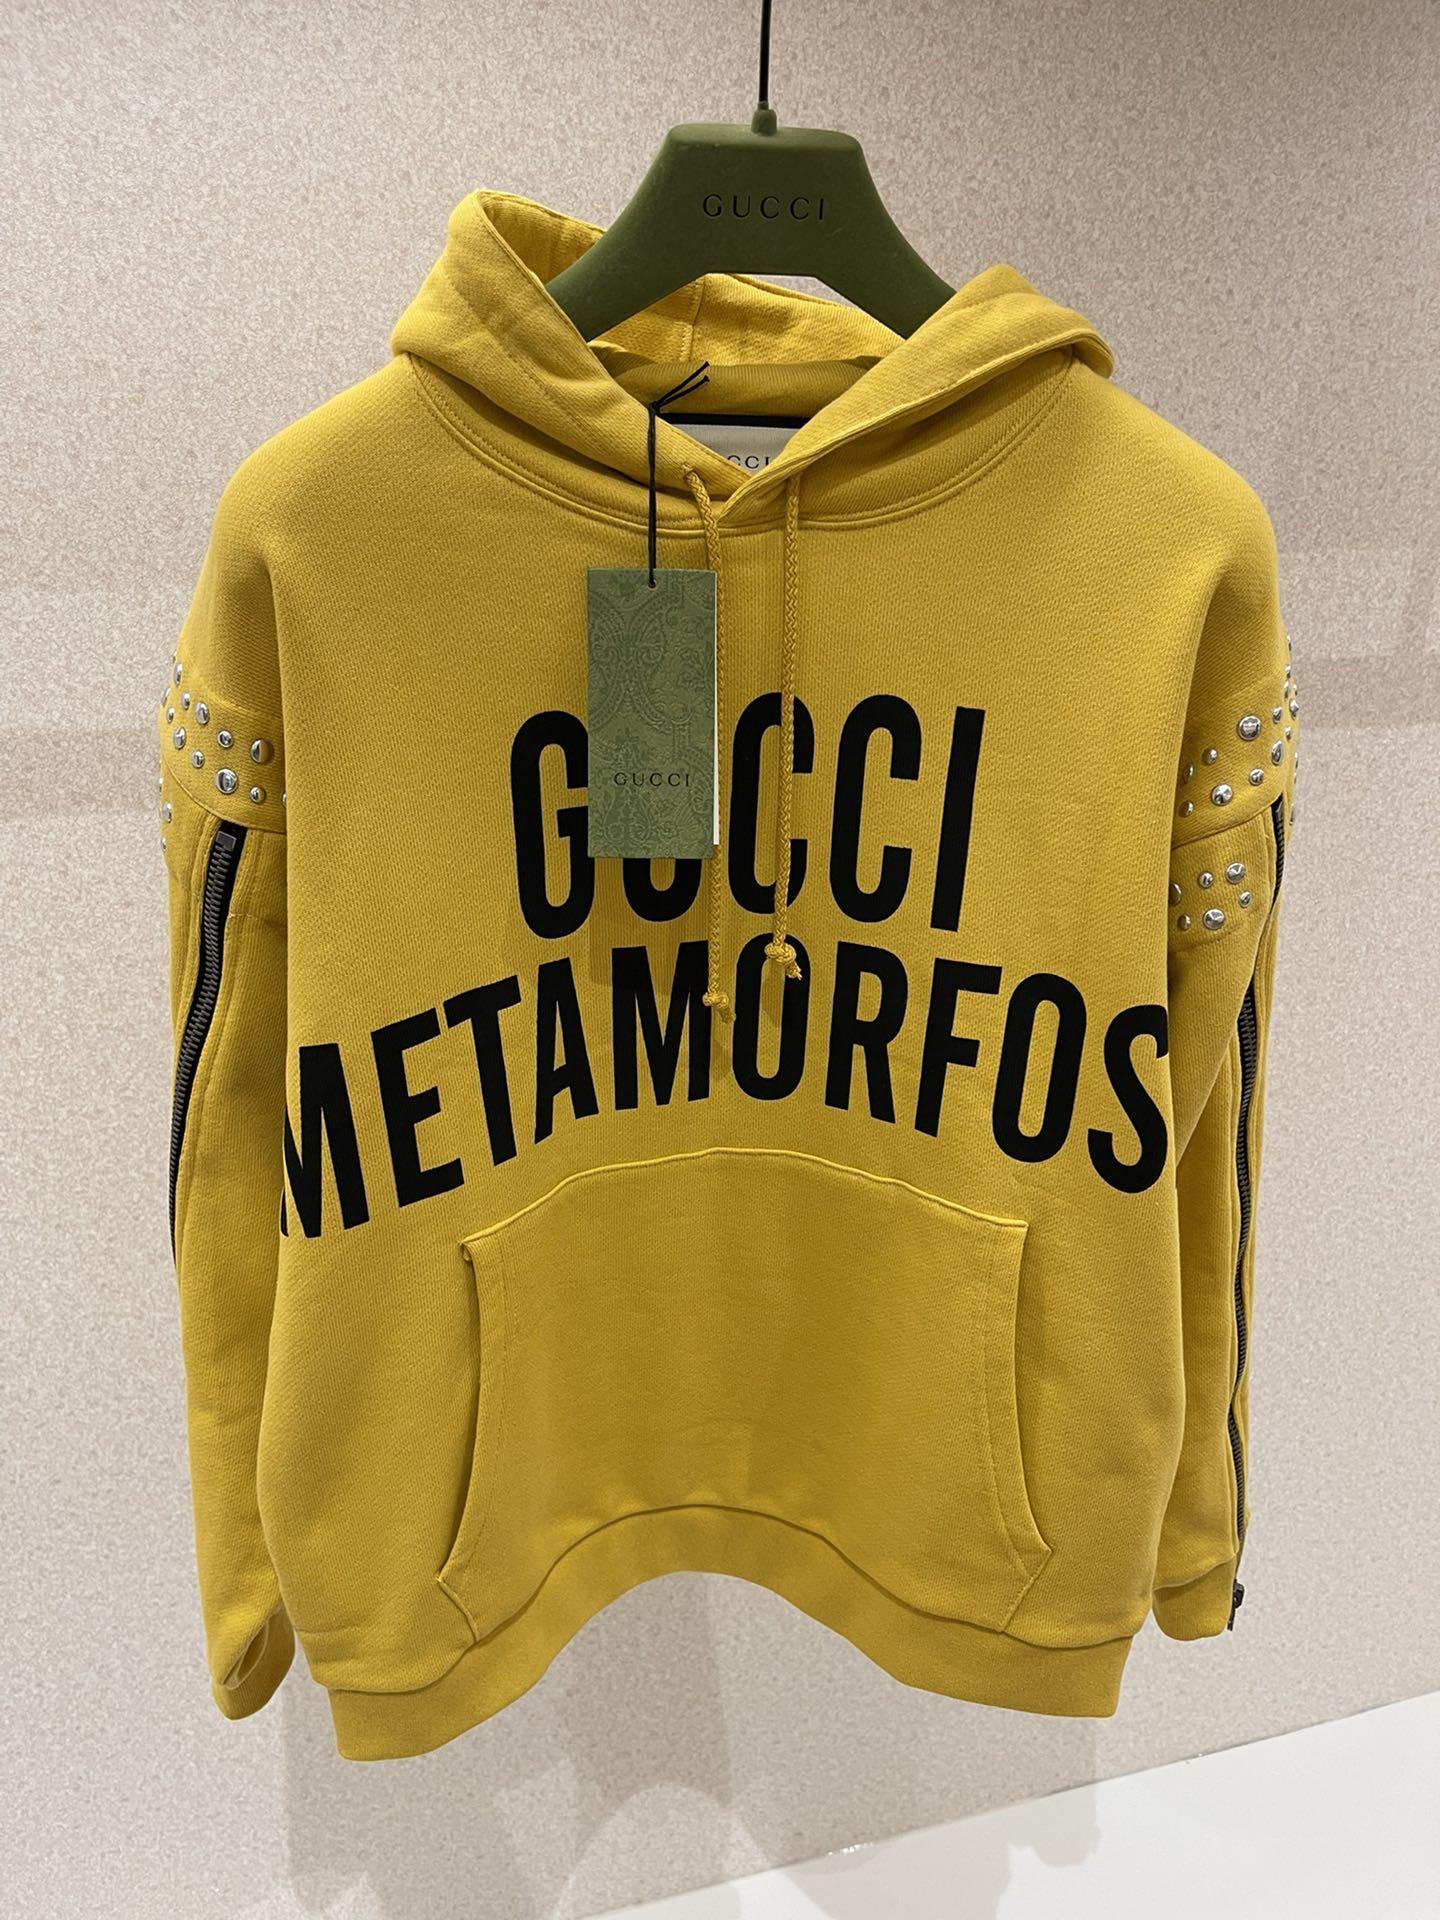 cotton-gucci-metamorfosi-sweatshirt-5000_16845004772-1000